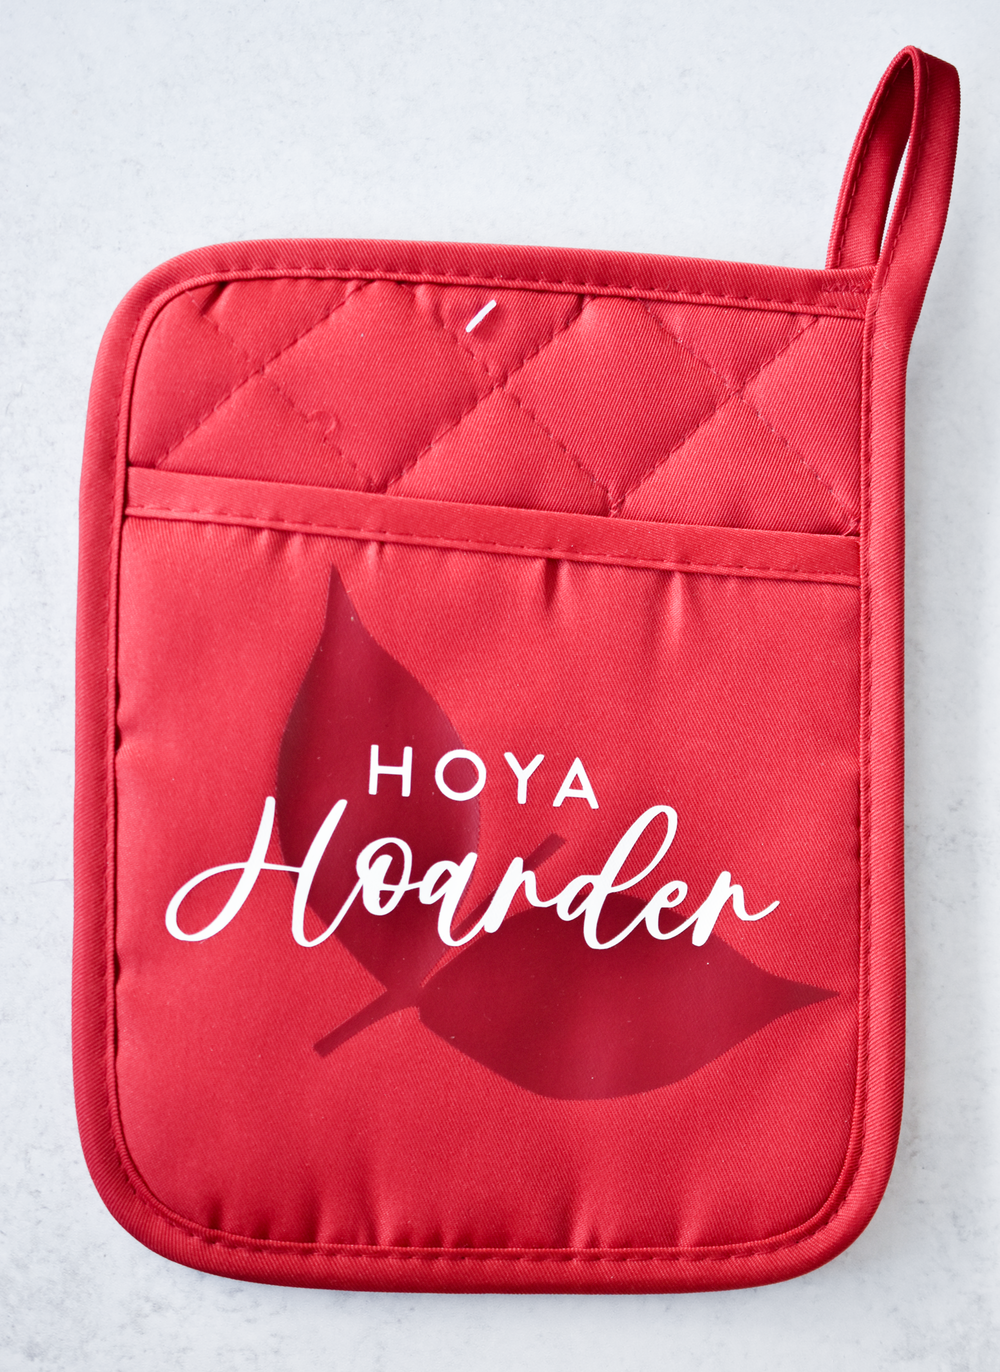 Hoya Hoarder Red Oven Pot Mit